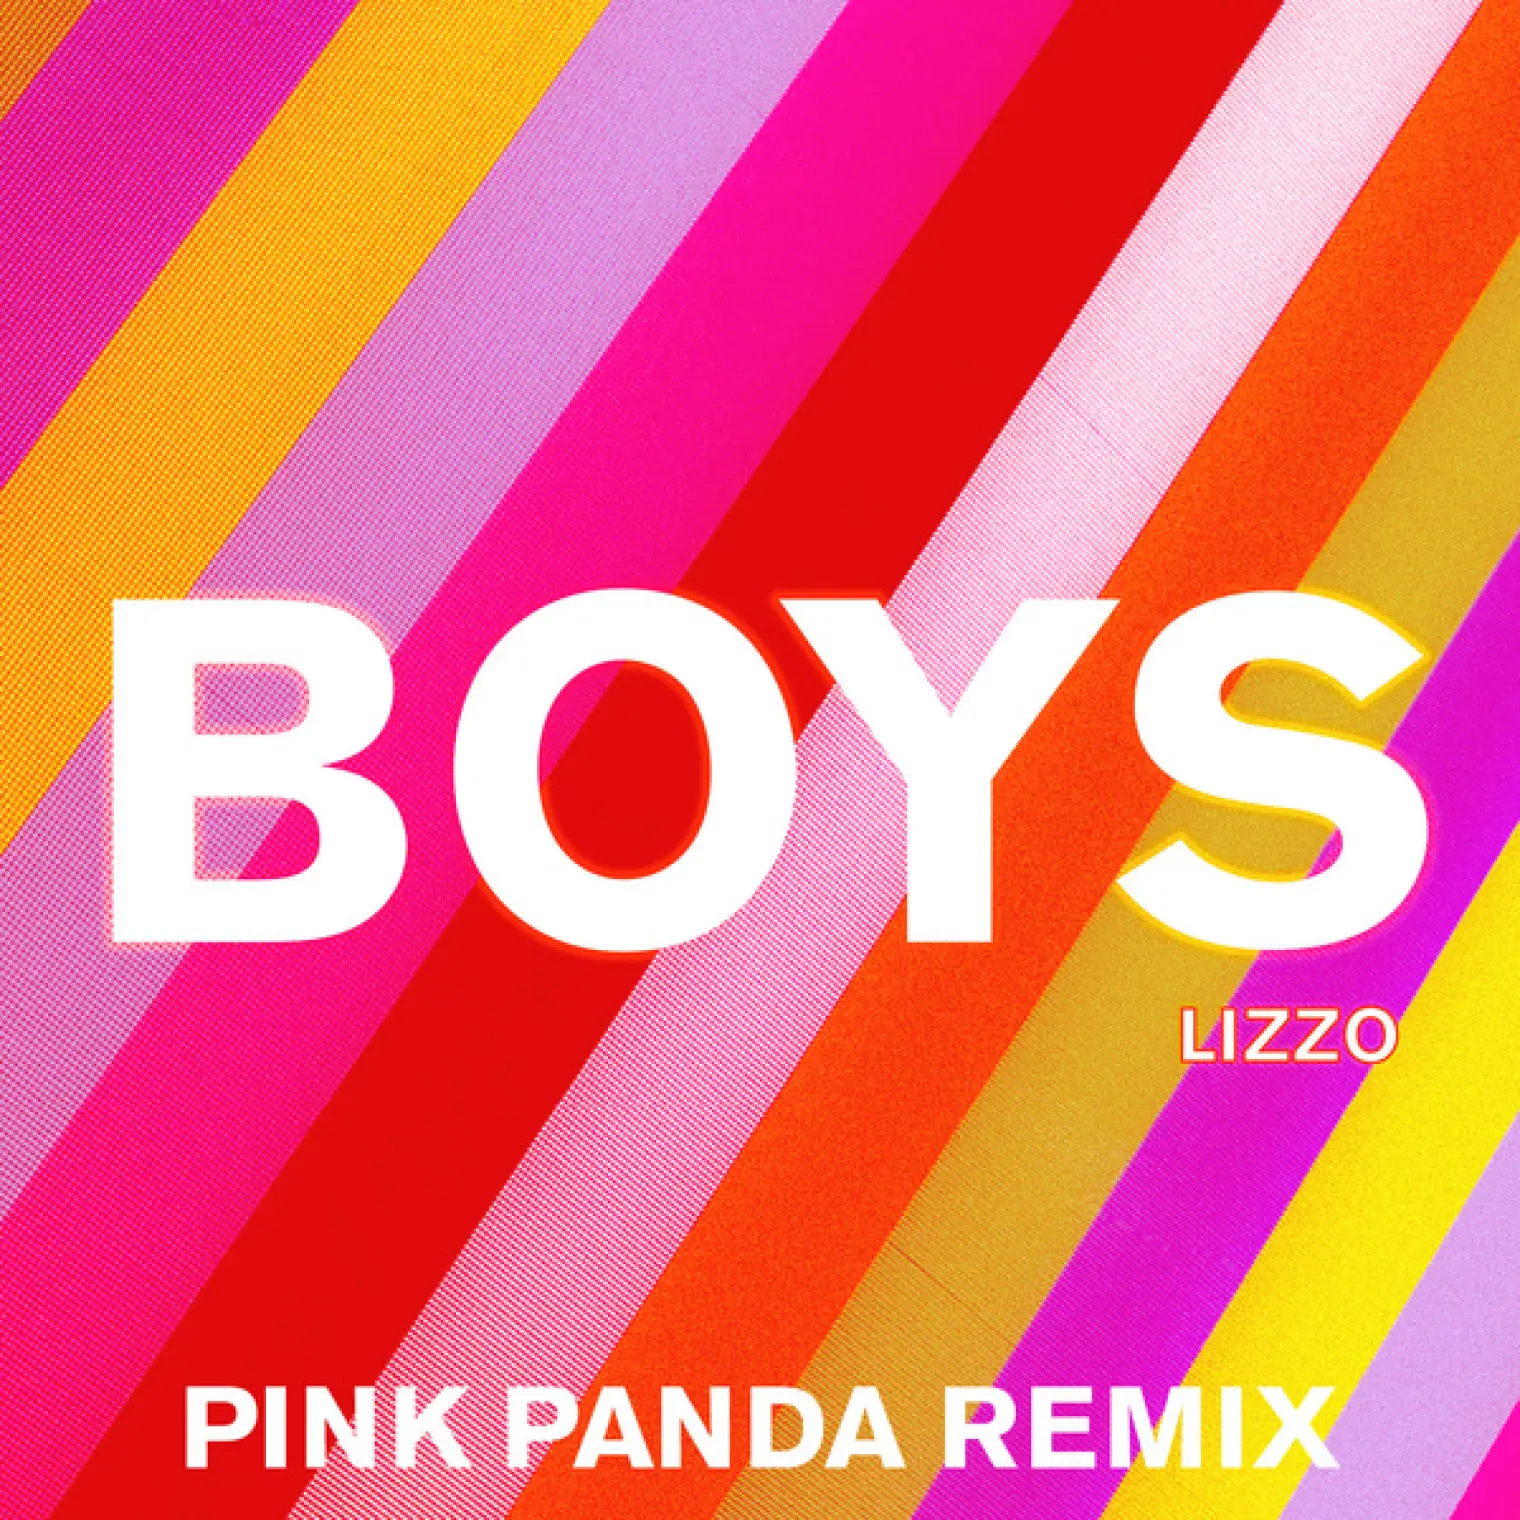 Boys (Pink Panda Remix) -  Lizzo 